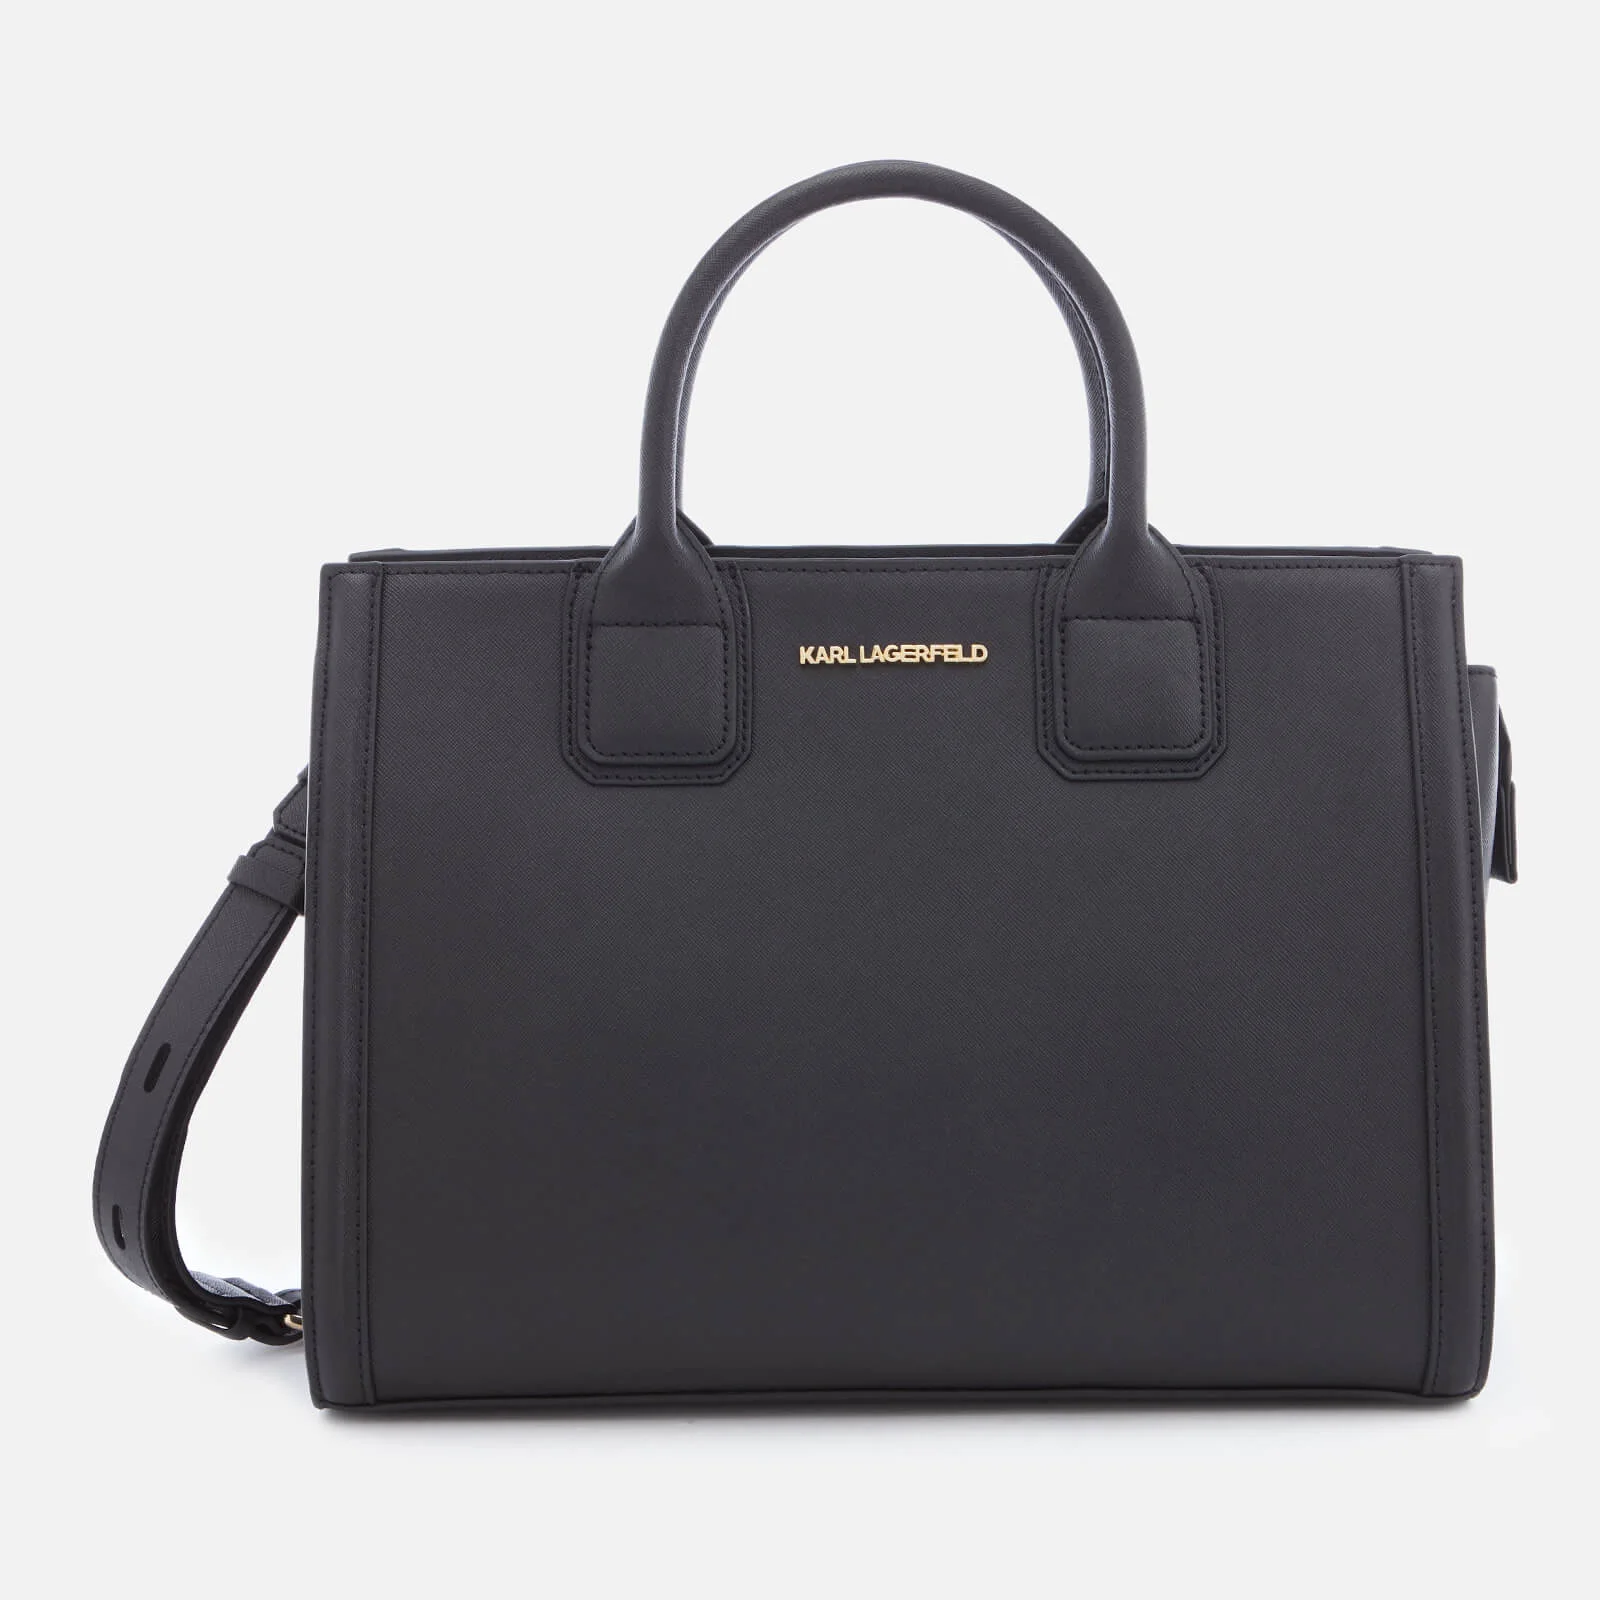 Karl Lagerfeld Women's K/Klassik Tote Bag - Black/Gold Image 1